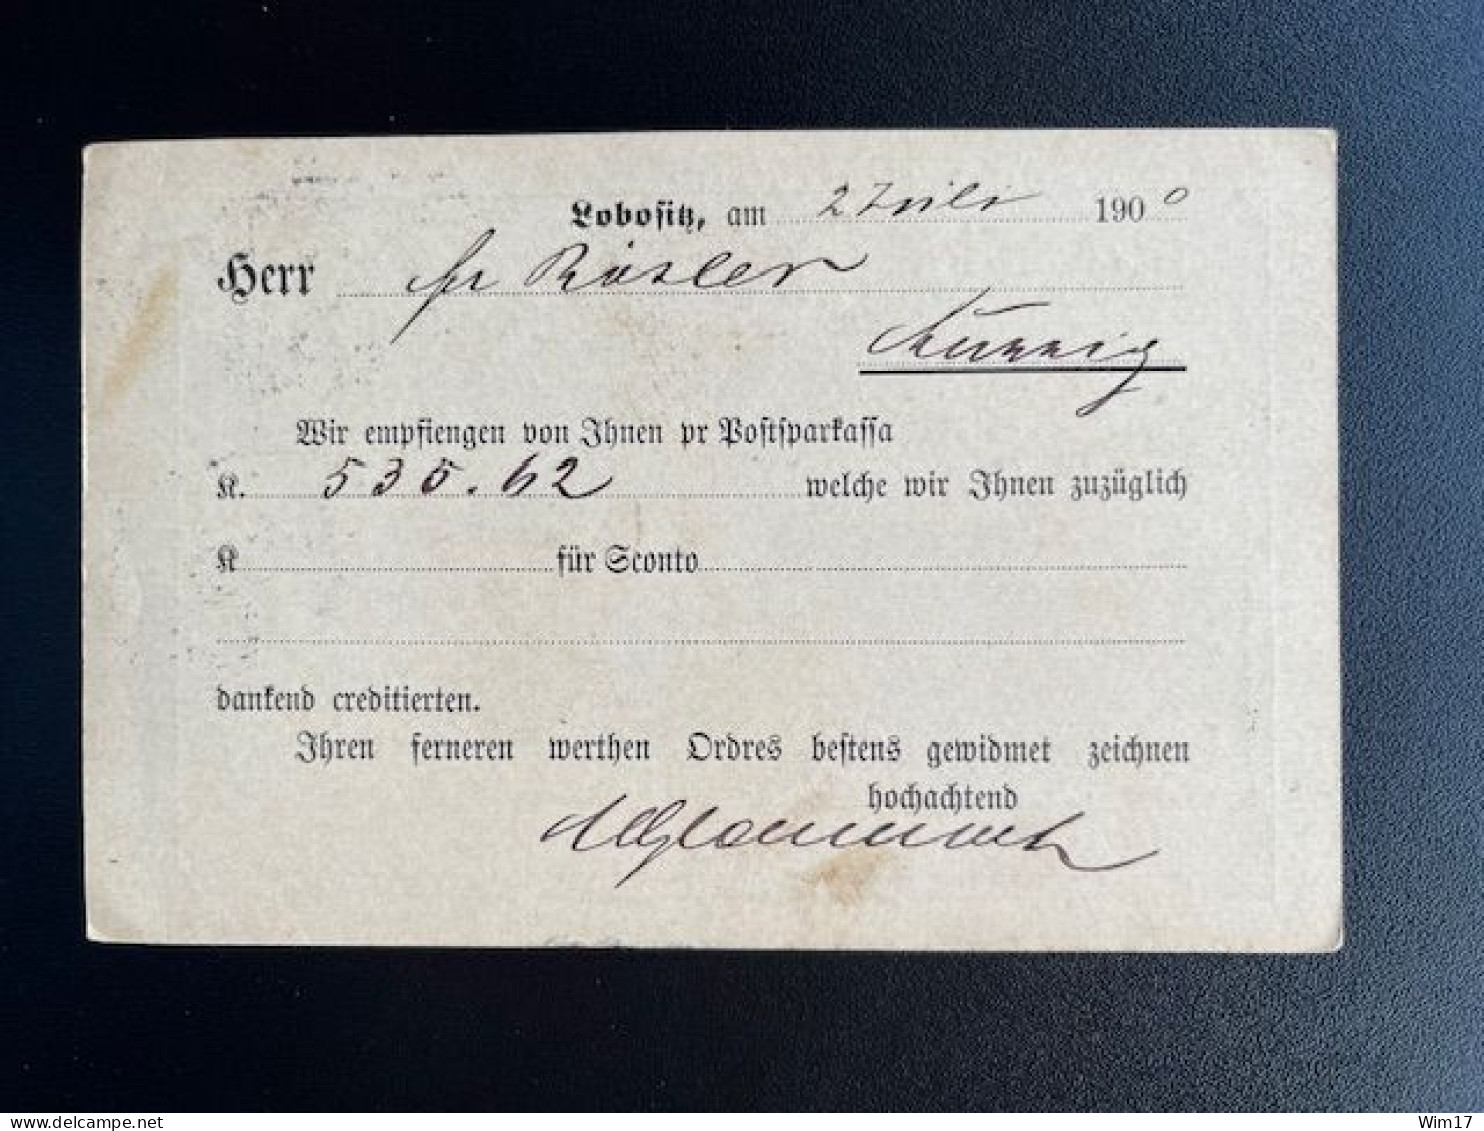 AUSTRIA 1900 POSTCARD LOBOSITZ LOVOSICE TO AUSSIG 03-07-1900 OOSTENRIJK OSTERREICH - Cartes Postales